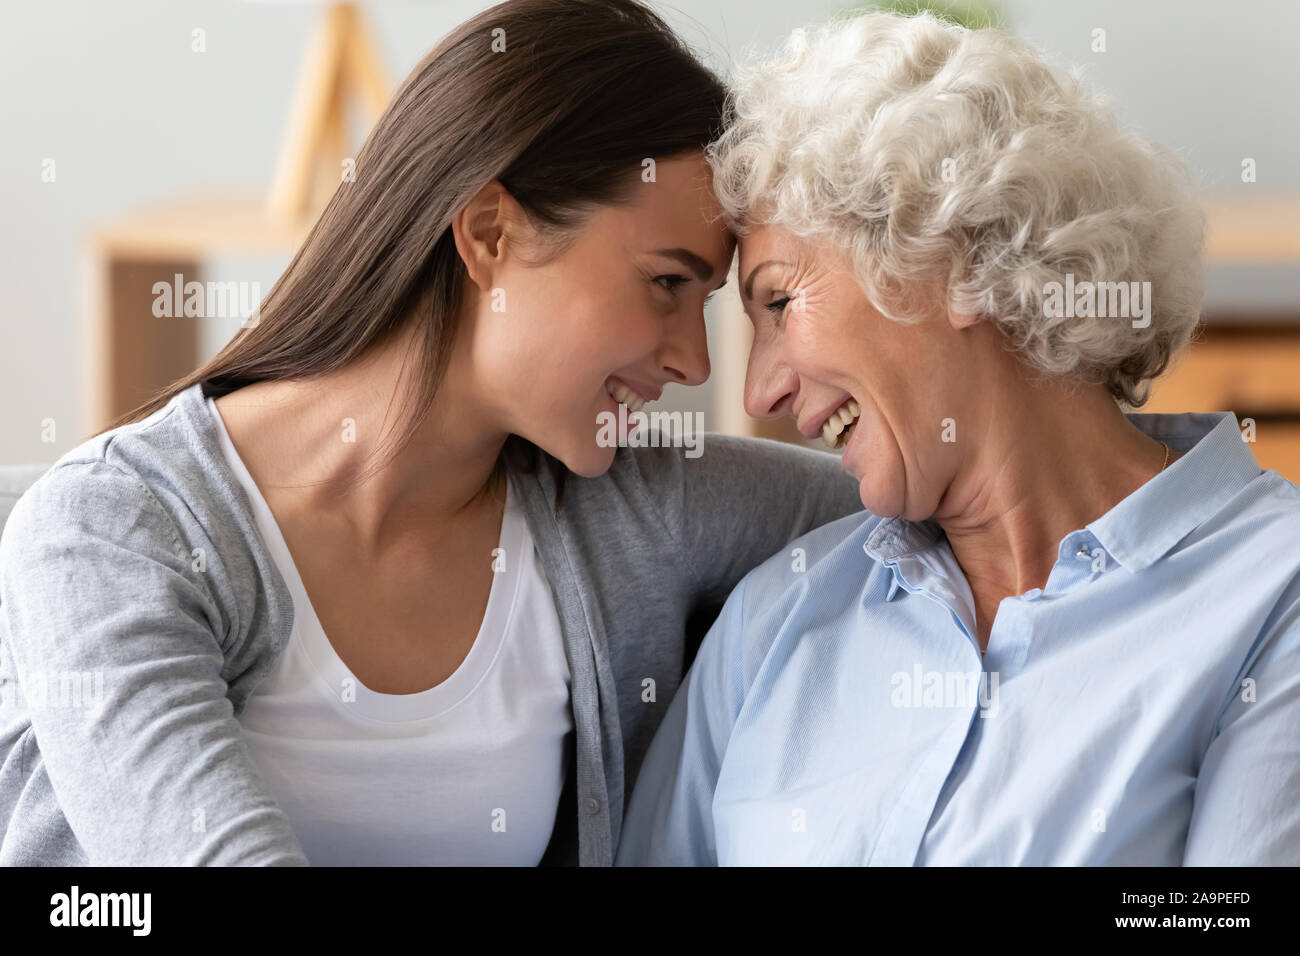 Smiling two generation women family laughing bonding cuddling together Stock Photo